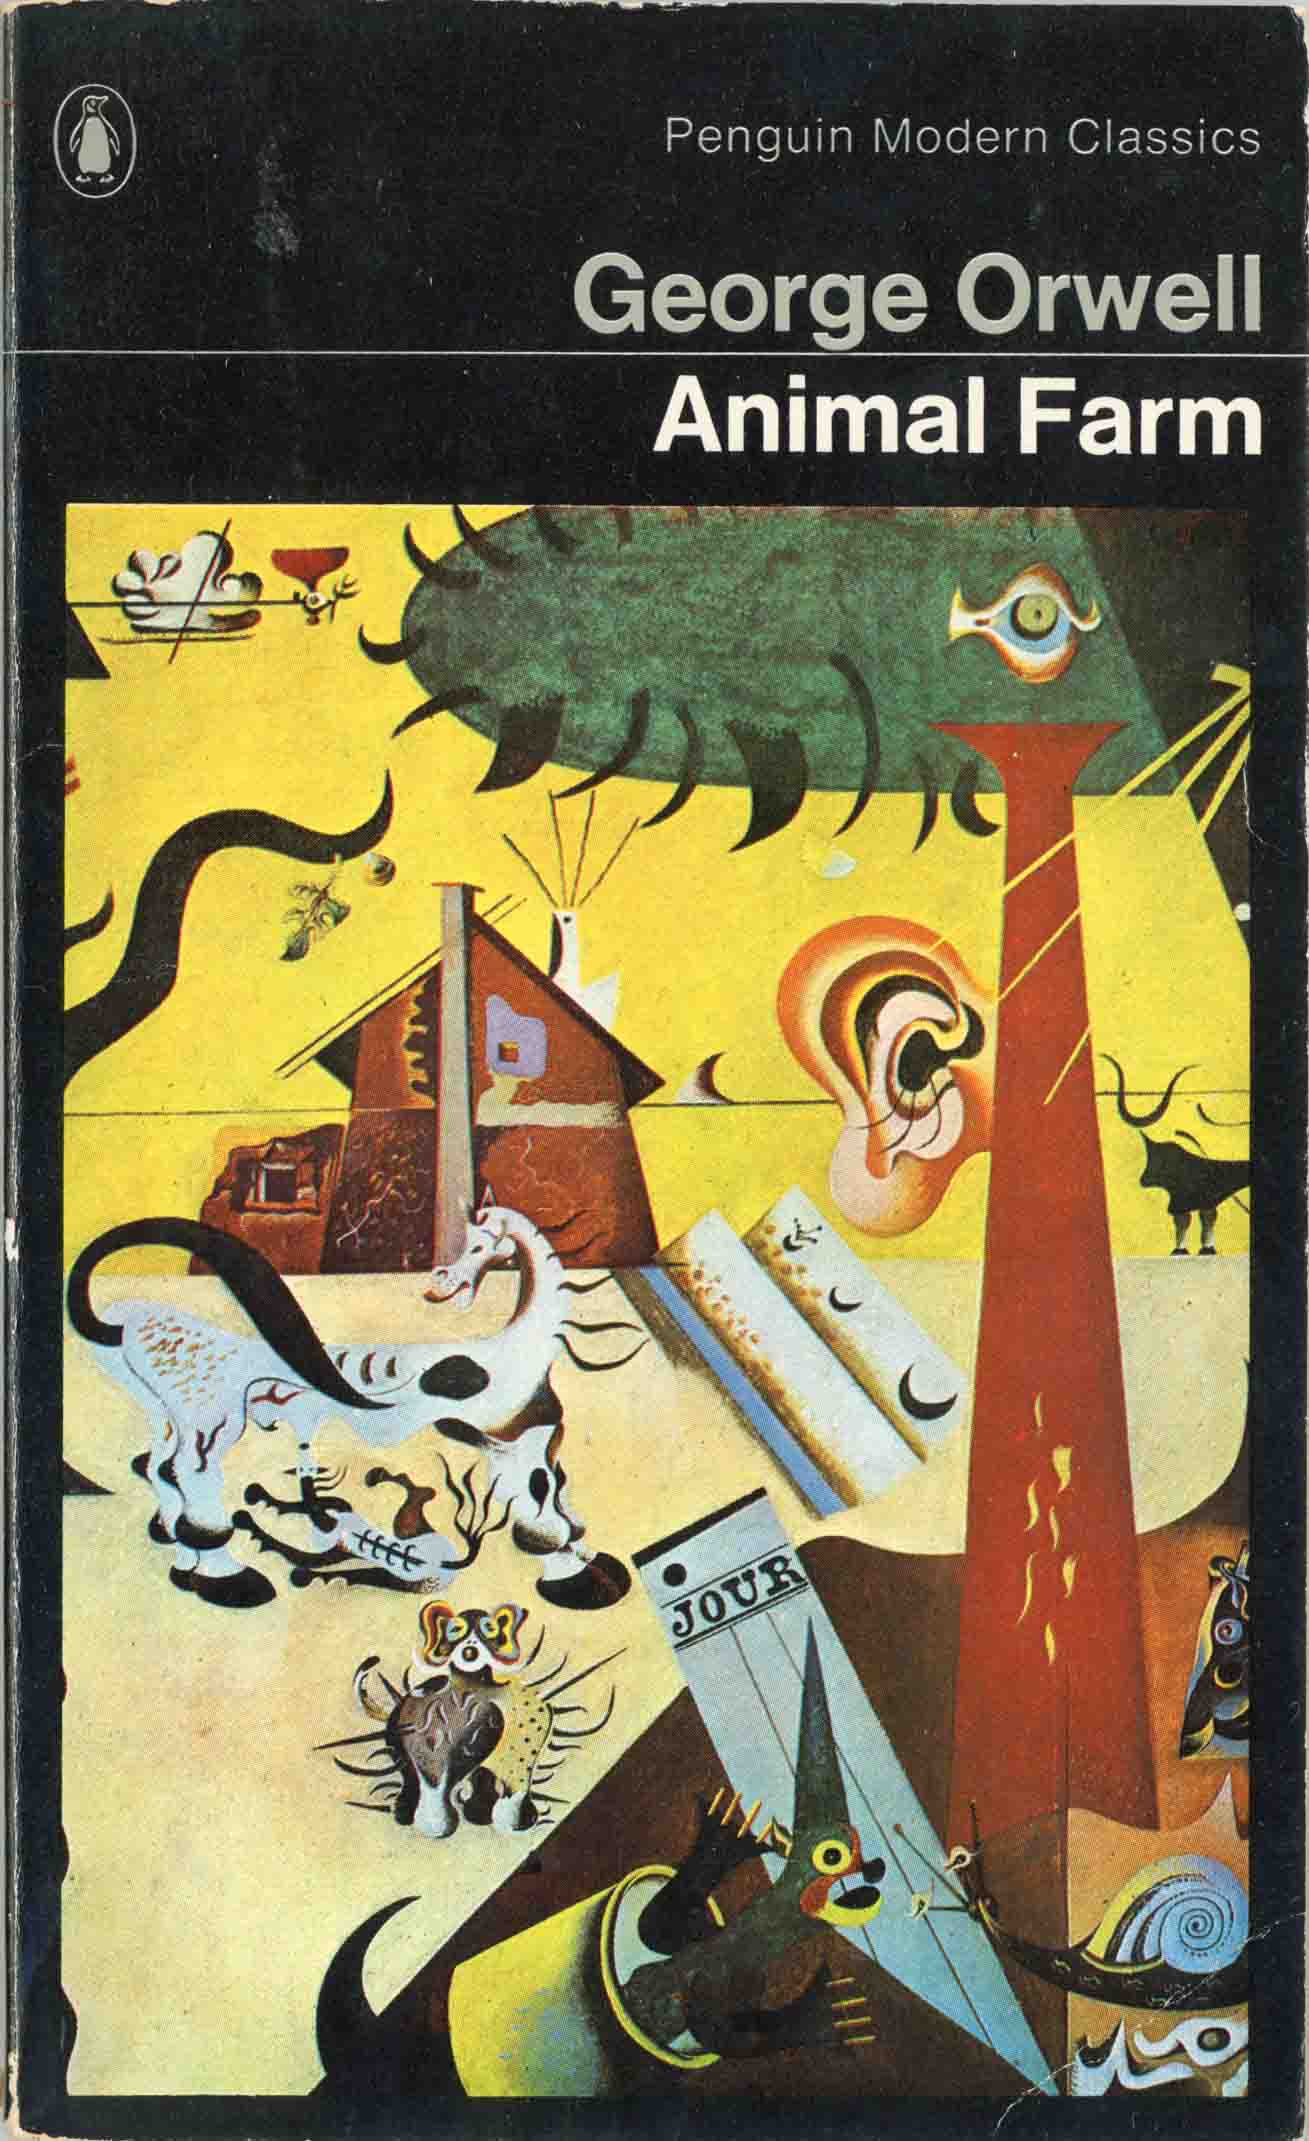 Penguin_Animal Farm_Miro cover